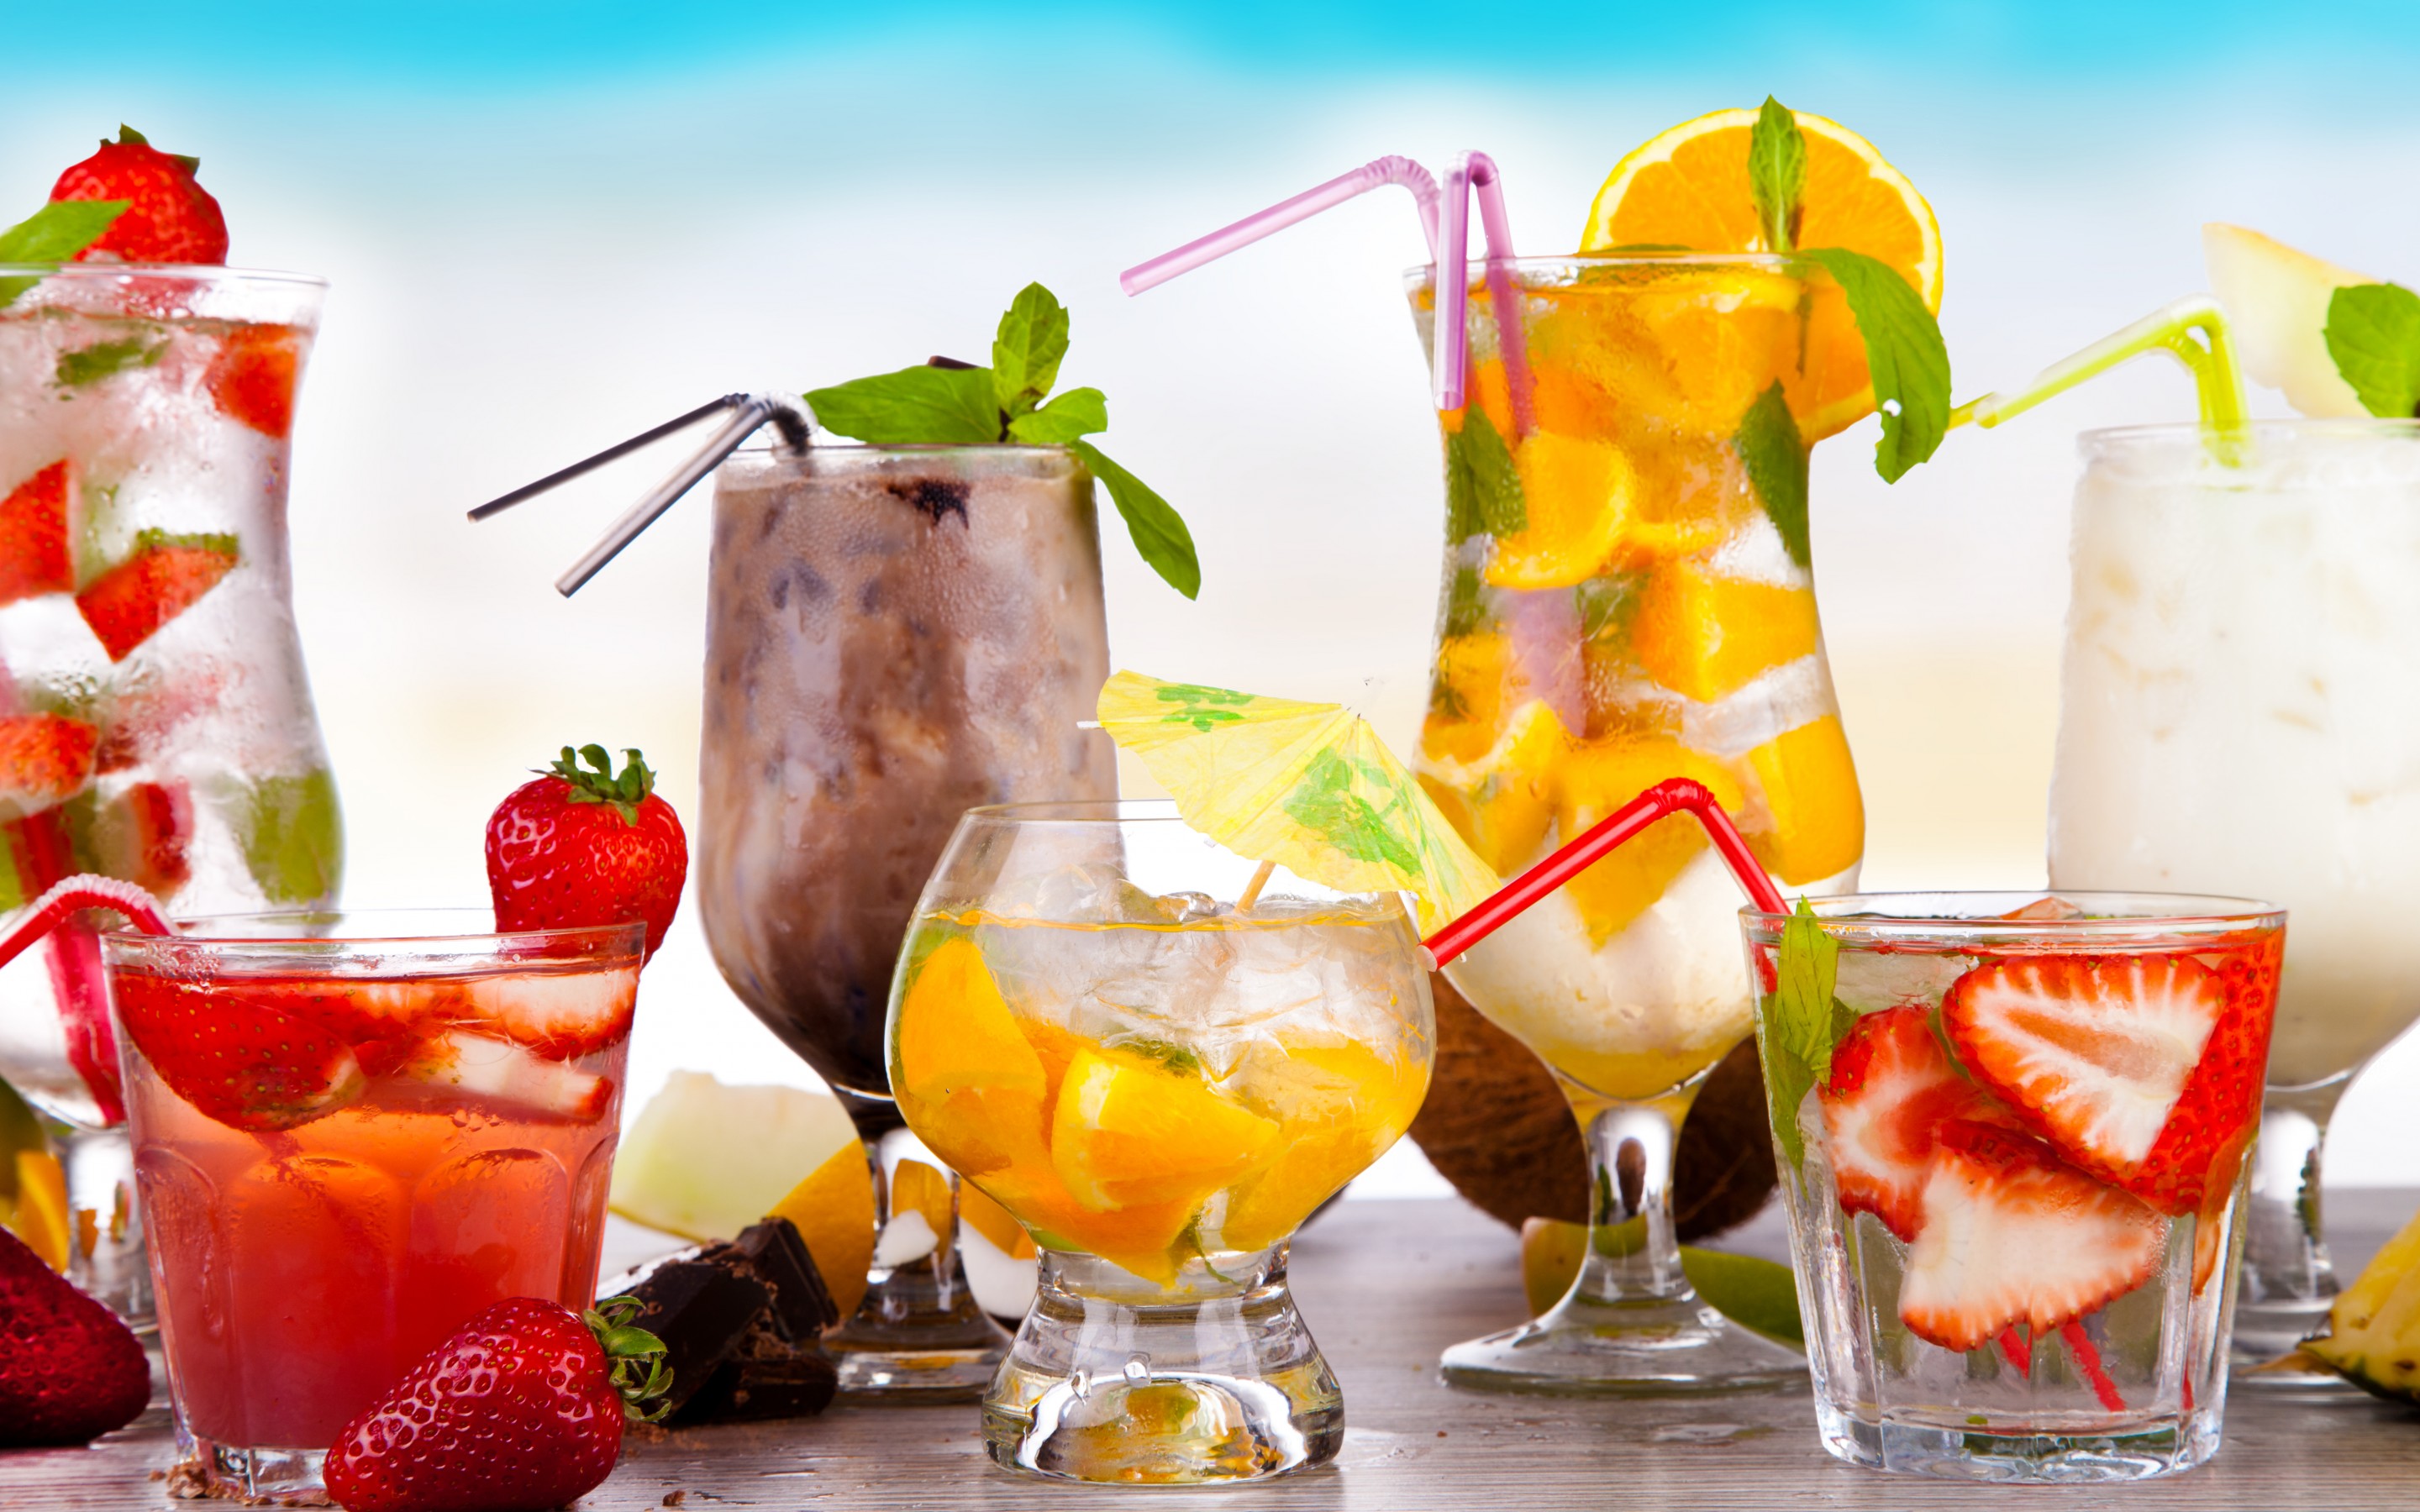 cocktails, Neck, Chocolate, Wine, Glasses, Cups, Ice, Fruit, Citrus, Oranges, Berries, Strawberries, Drinks, Summer Wallpaper